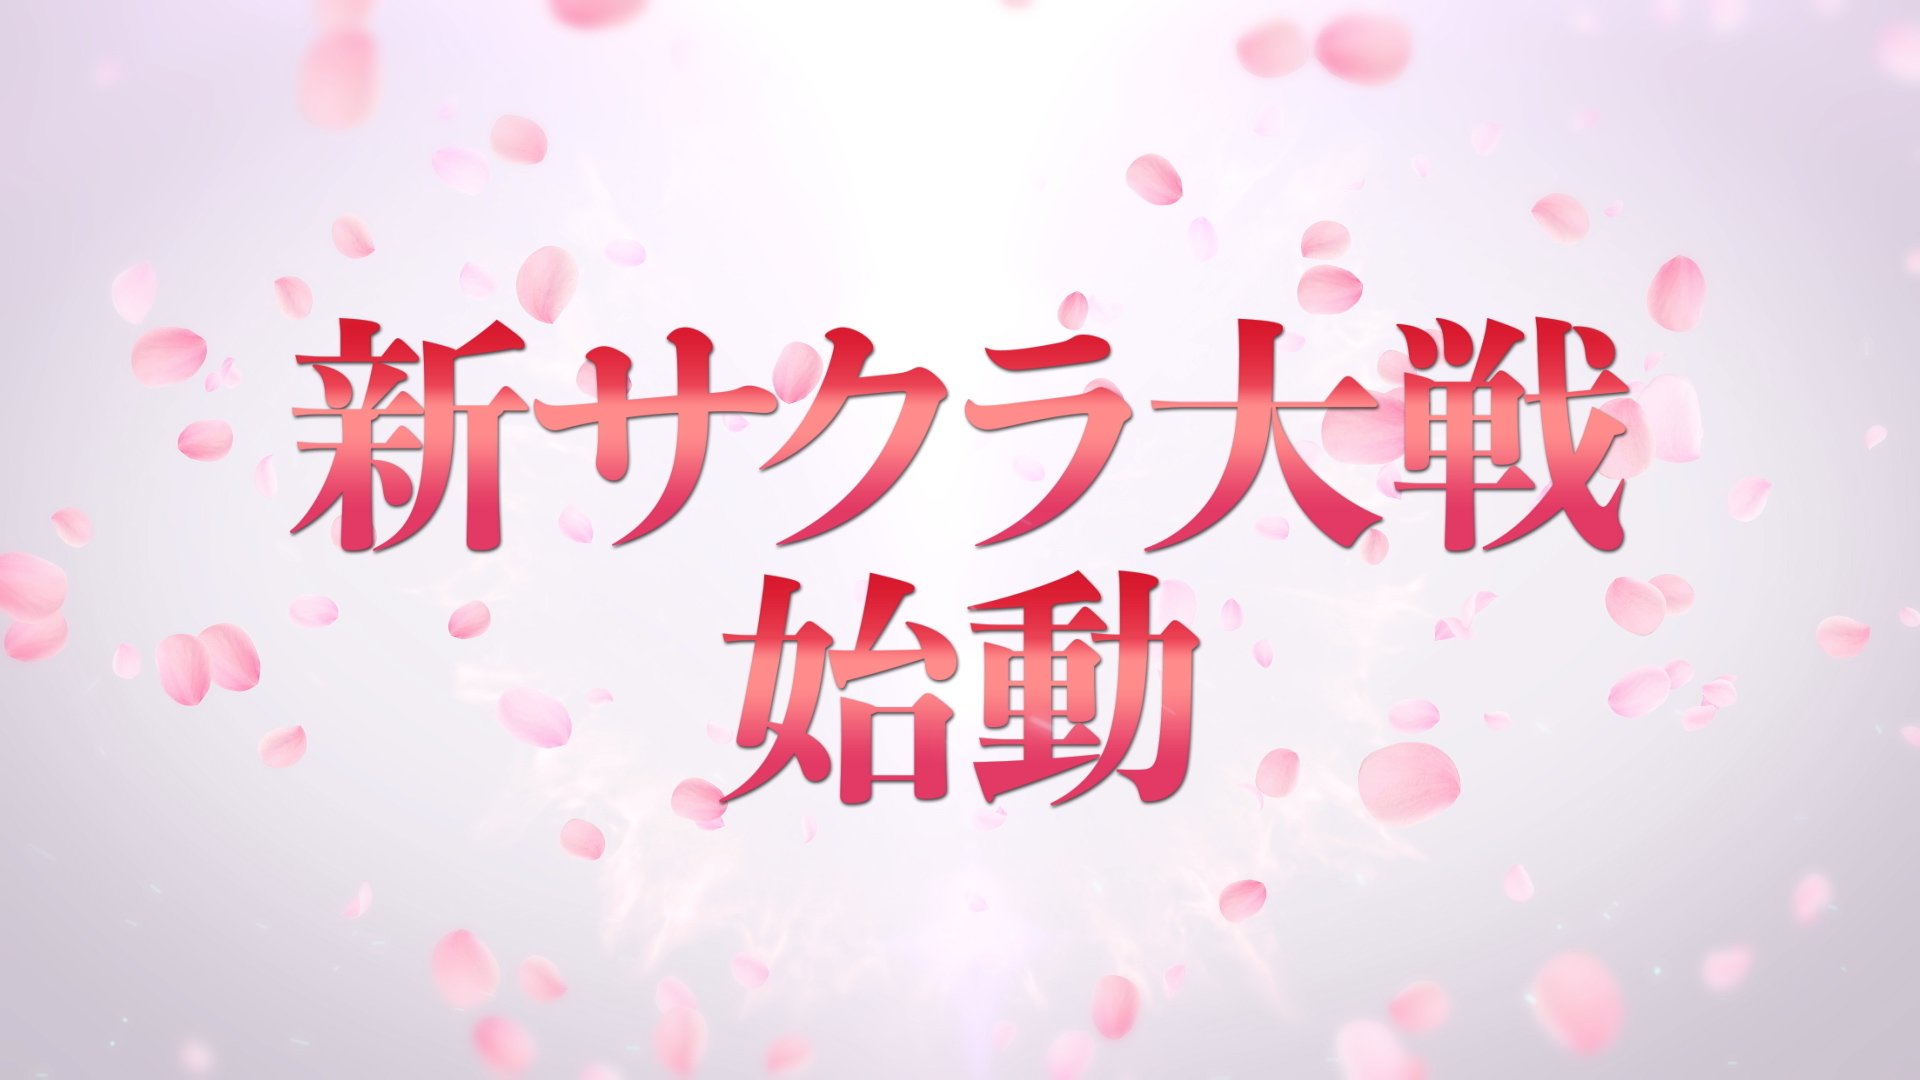 New Sakura Wars Game Announced